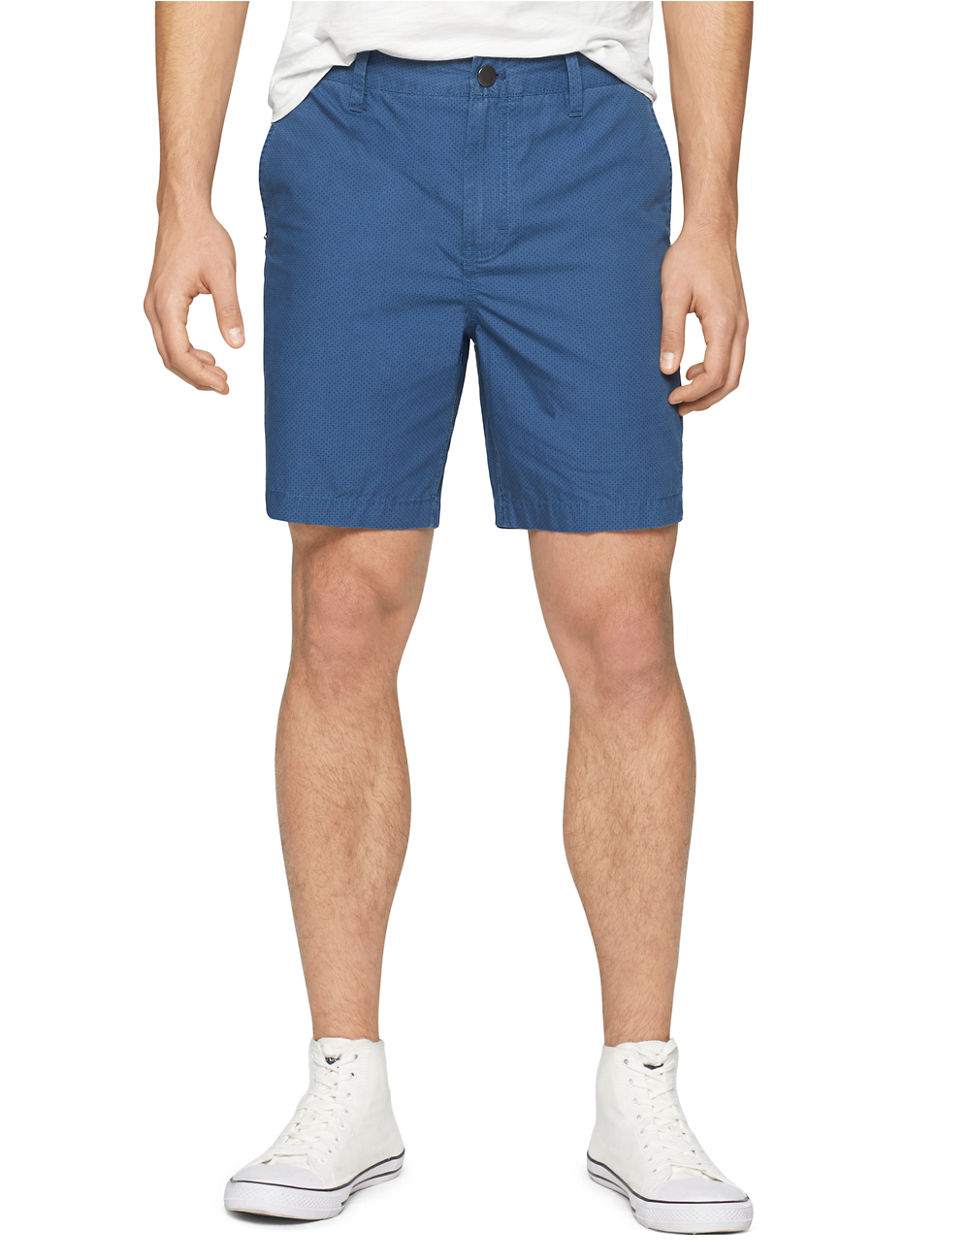 Lyst - Calvin Klein Jeans Polka Dot Flat Front Shorts in Blue for Men